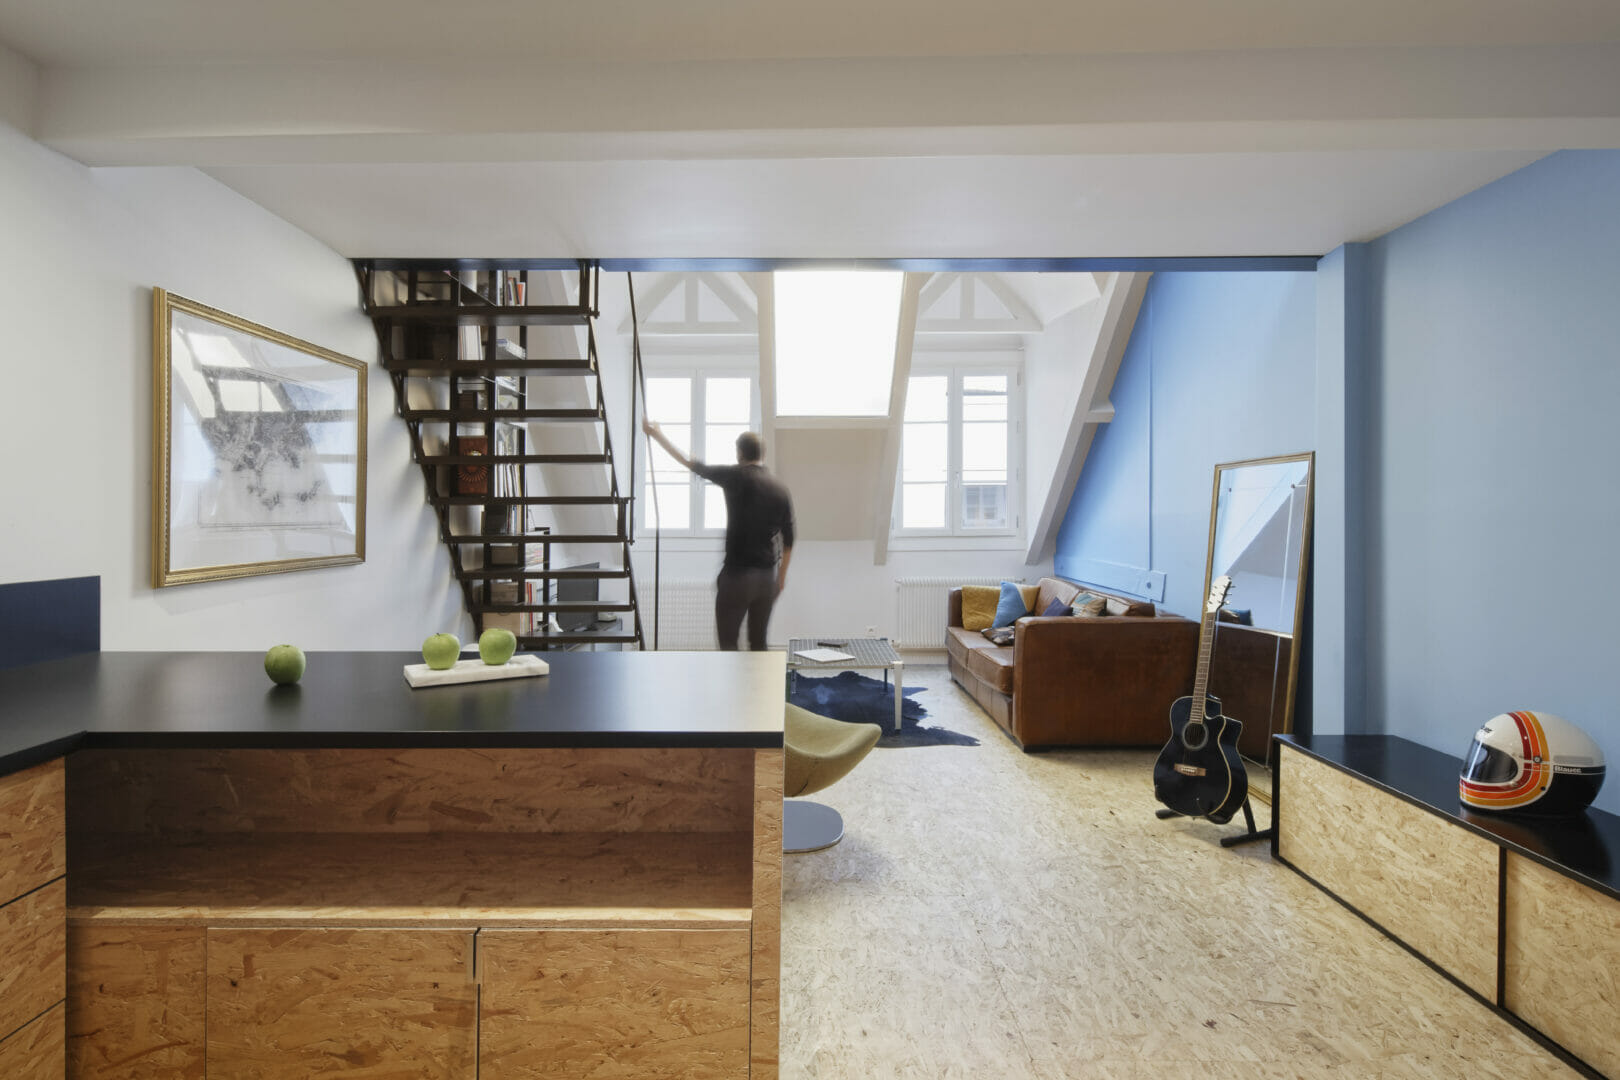 SterlingOSB Zero for industrial chic in compact Paris loft apartment